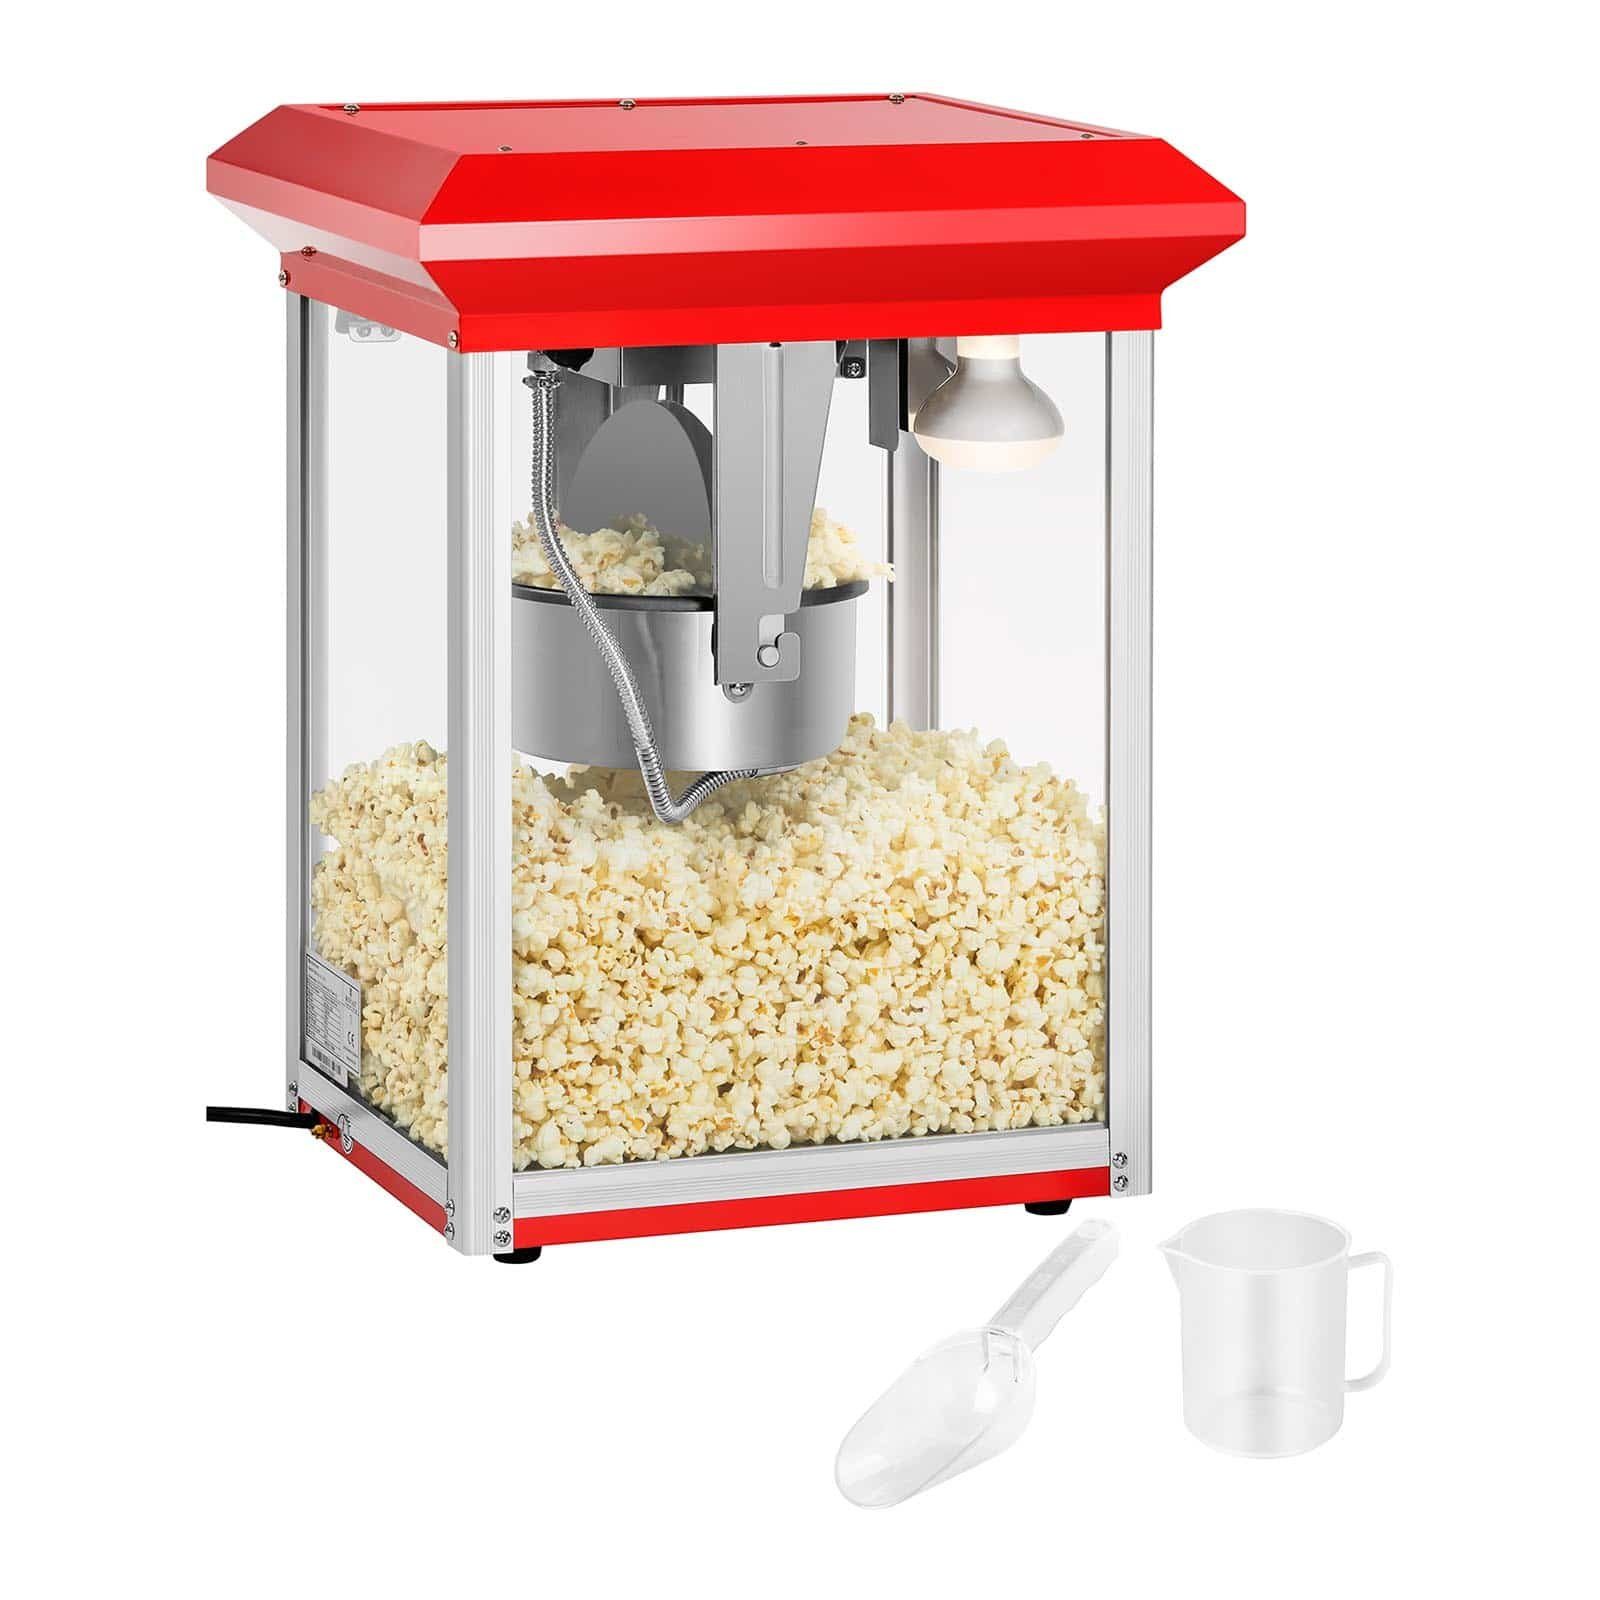 Neu Profi Popcornmaschine Popcornmaker Maschine 220V Popcorn Royal Catering 1.300W Popcornmaschine